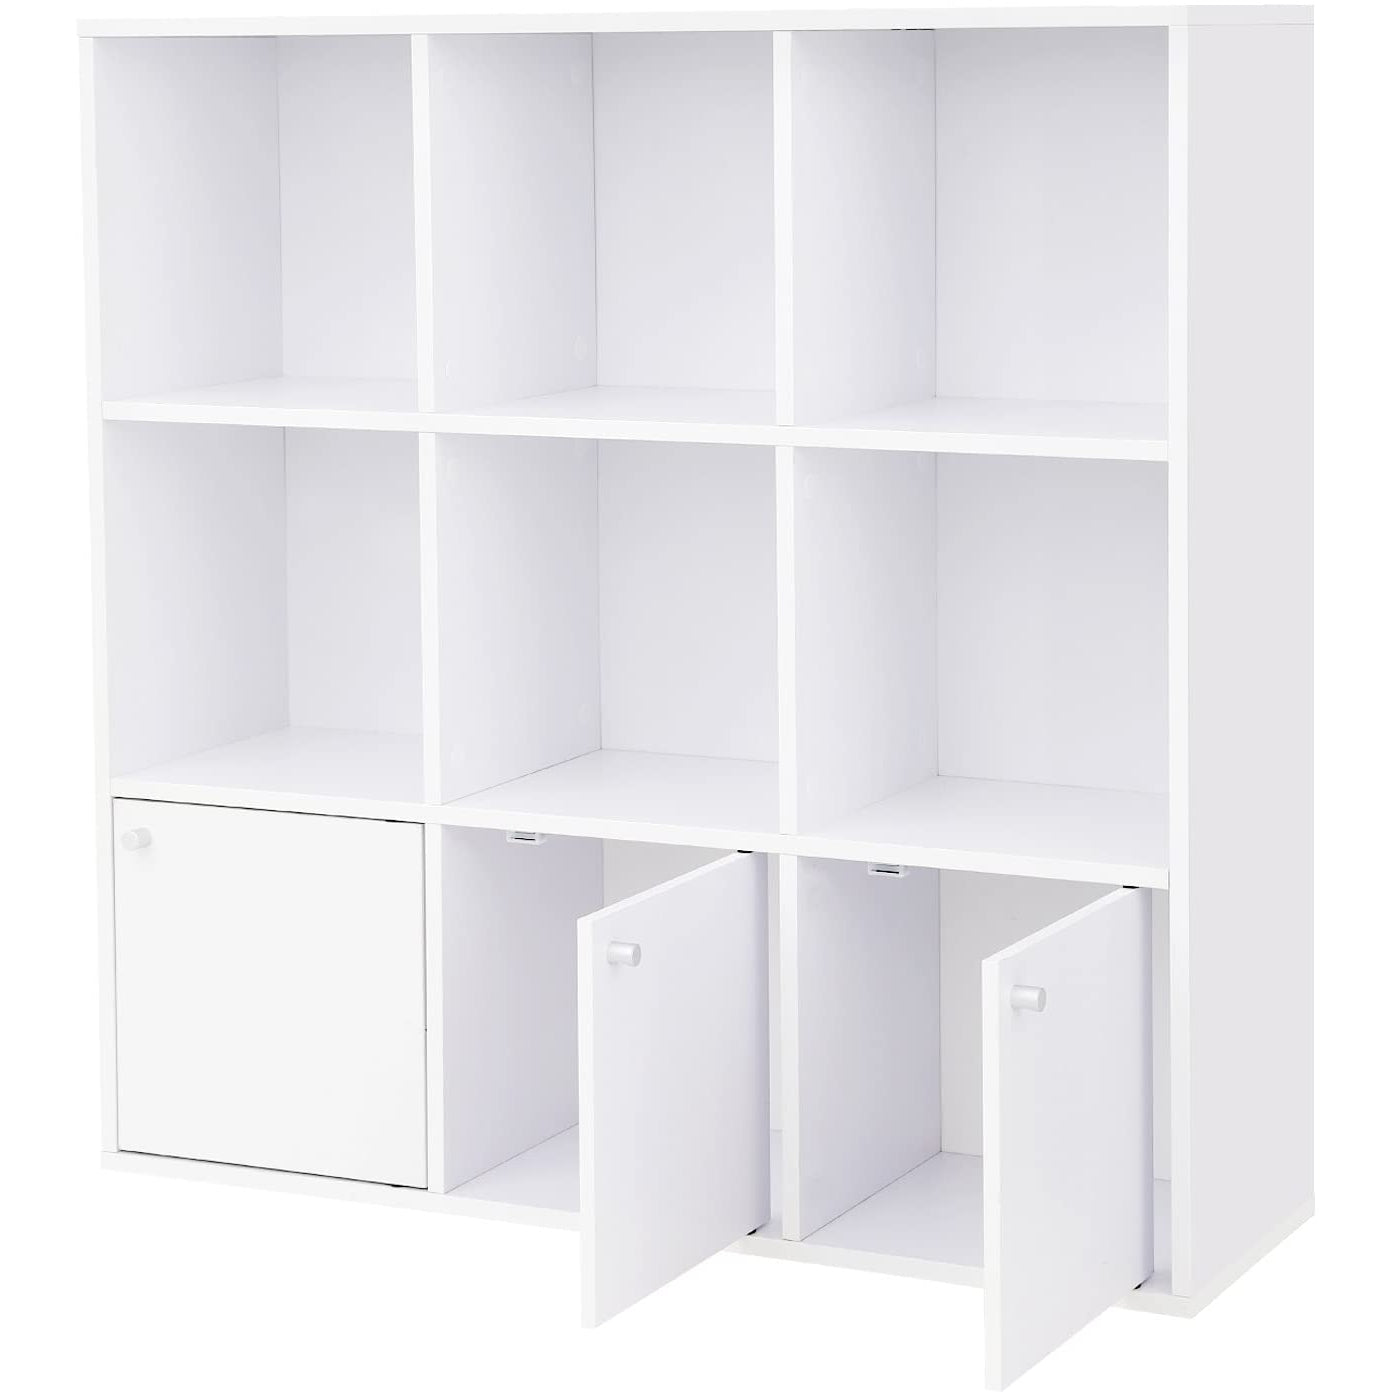 Nancy's White Bookcase 9 Compartments - White Bookcases Children's Room